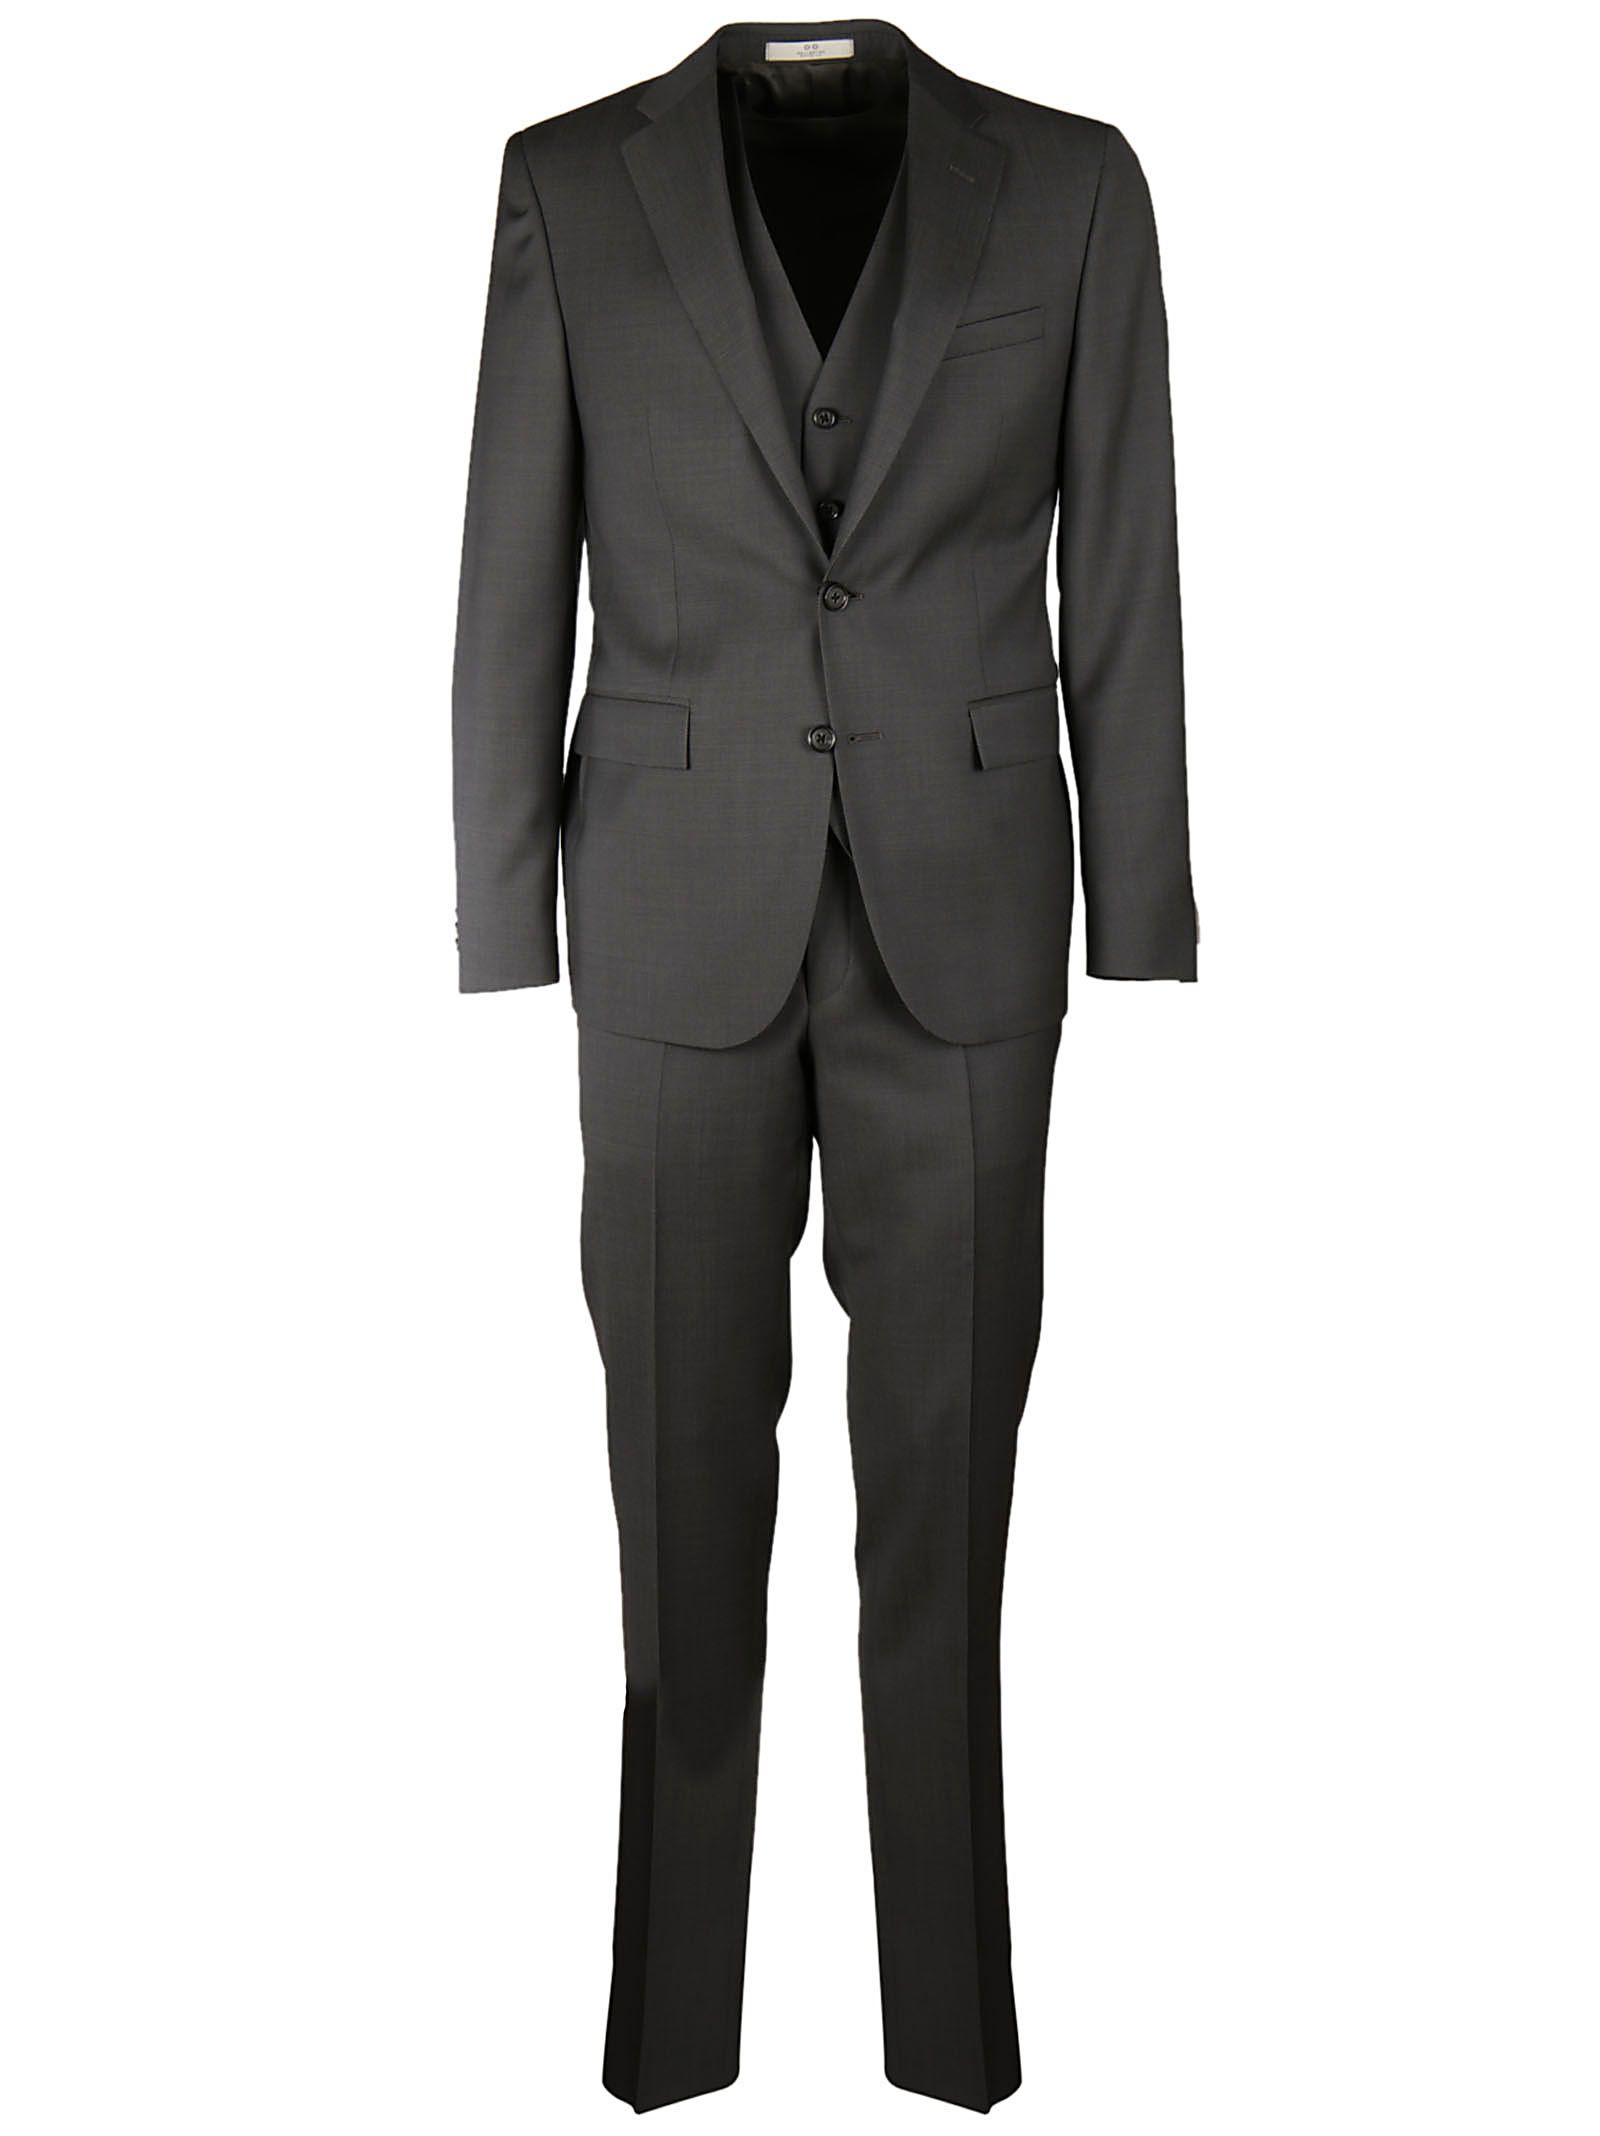 Corneliani - Corneliani Two Piece Suit - Gray, Men's Suits | Italist